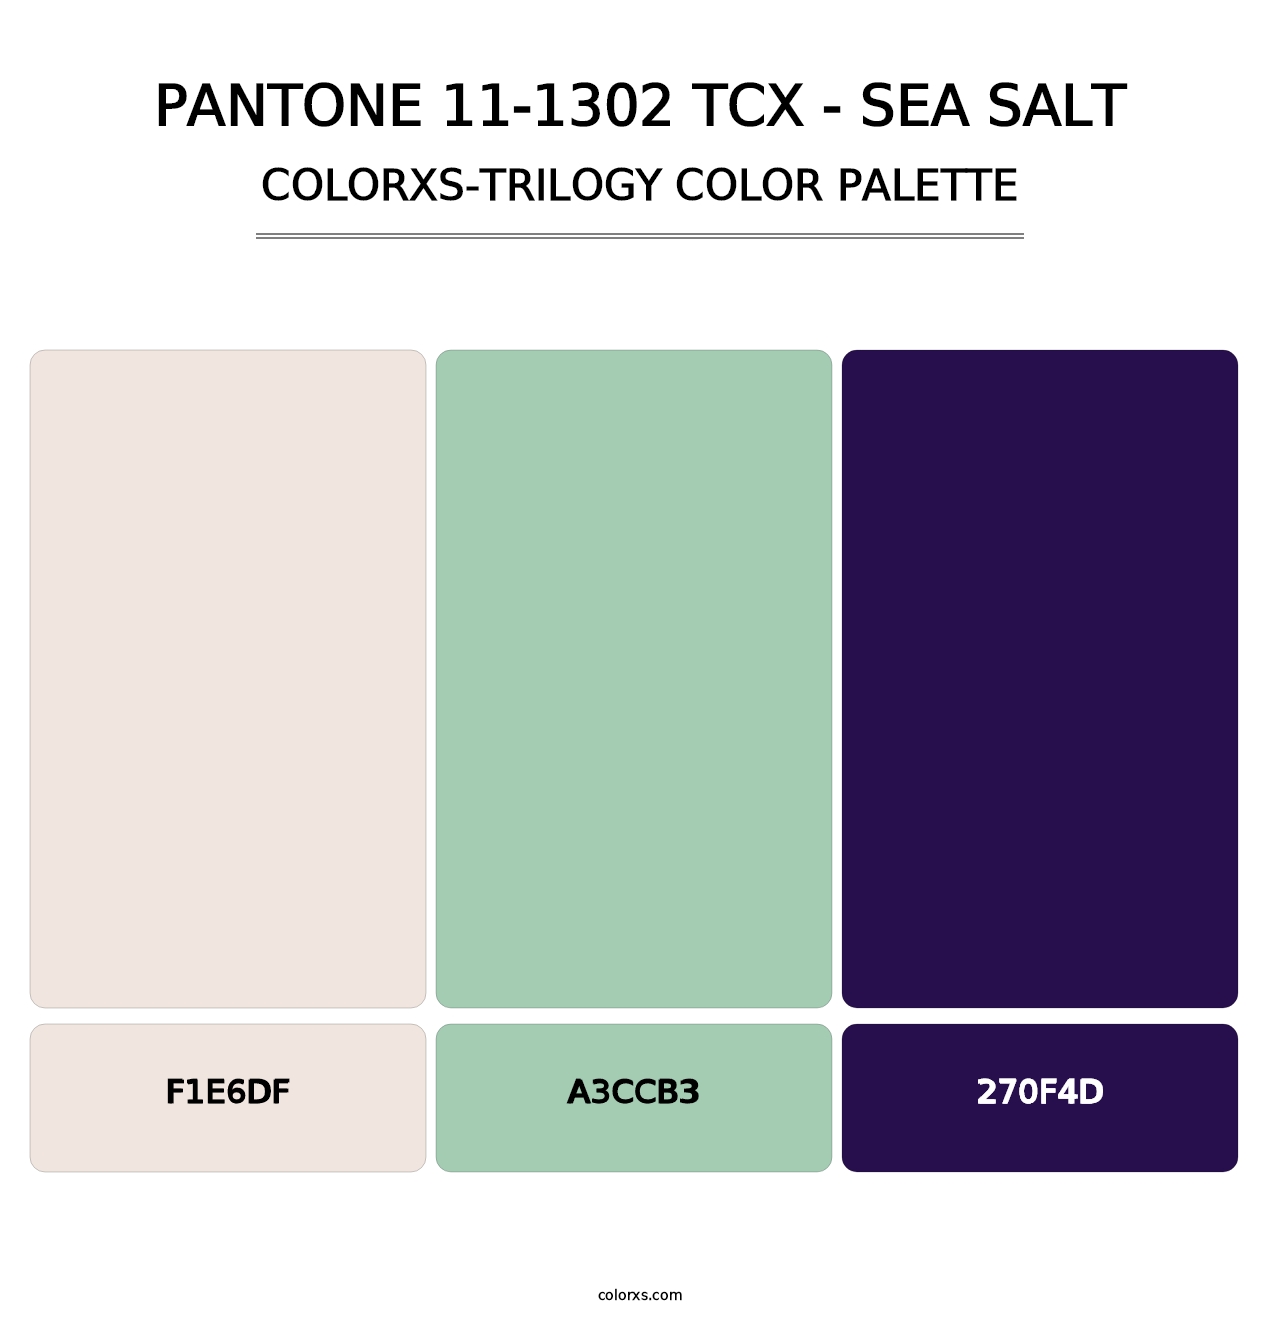 PANTONE 11-1302 TCX - Sea Salt - Colorxs Trilogy Palette